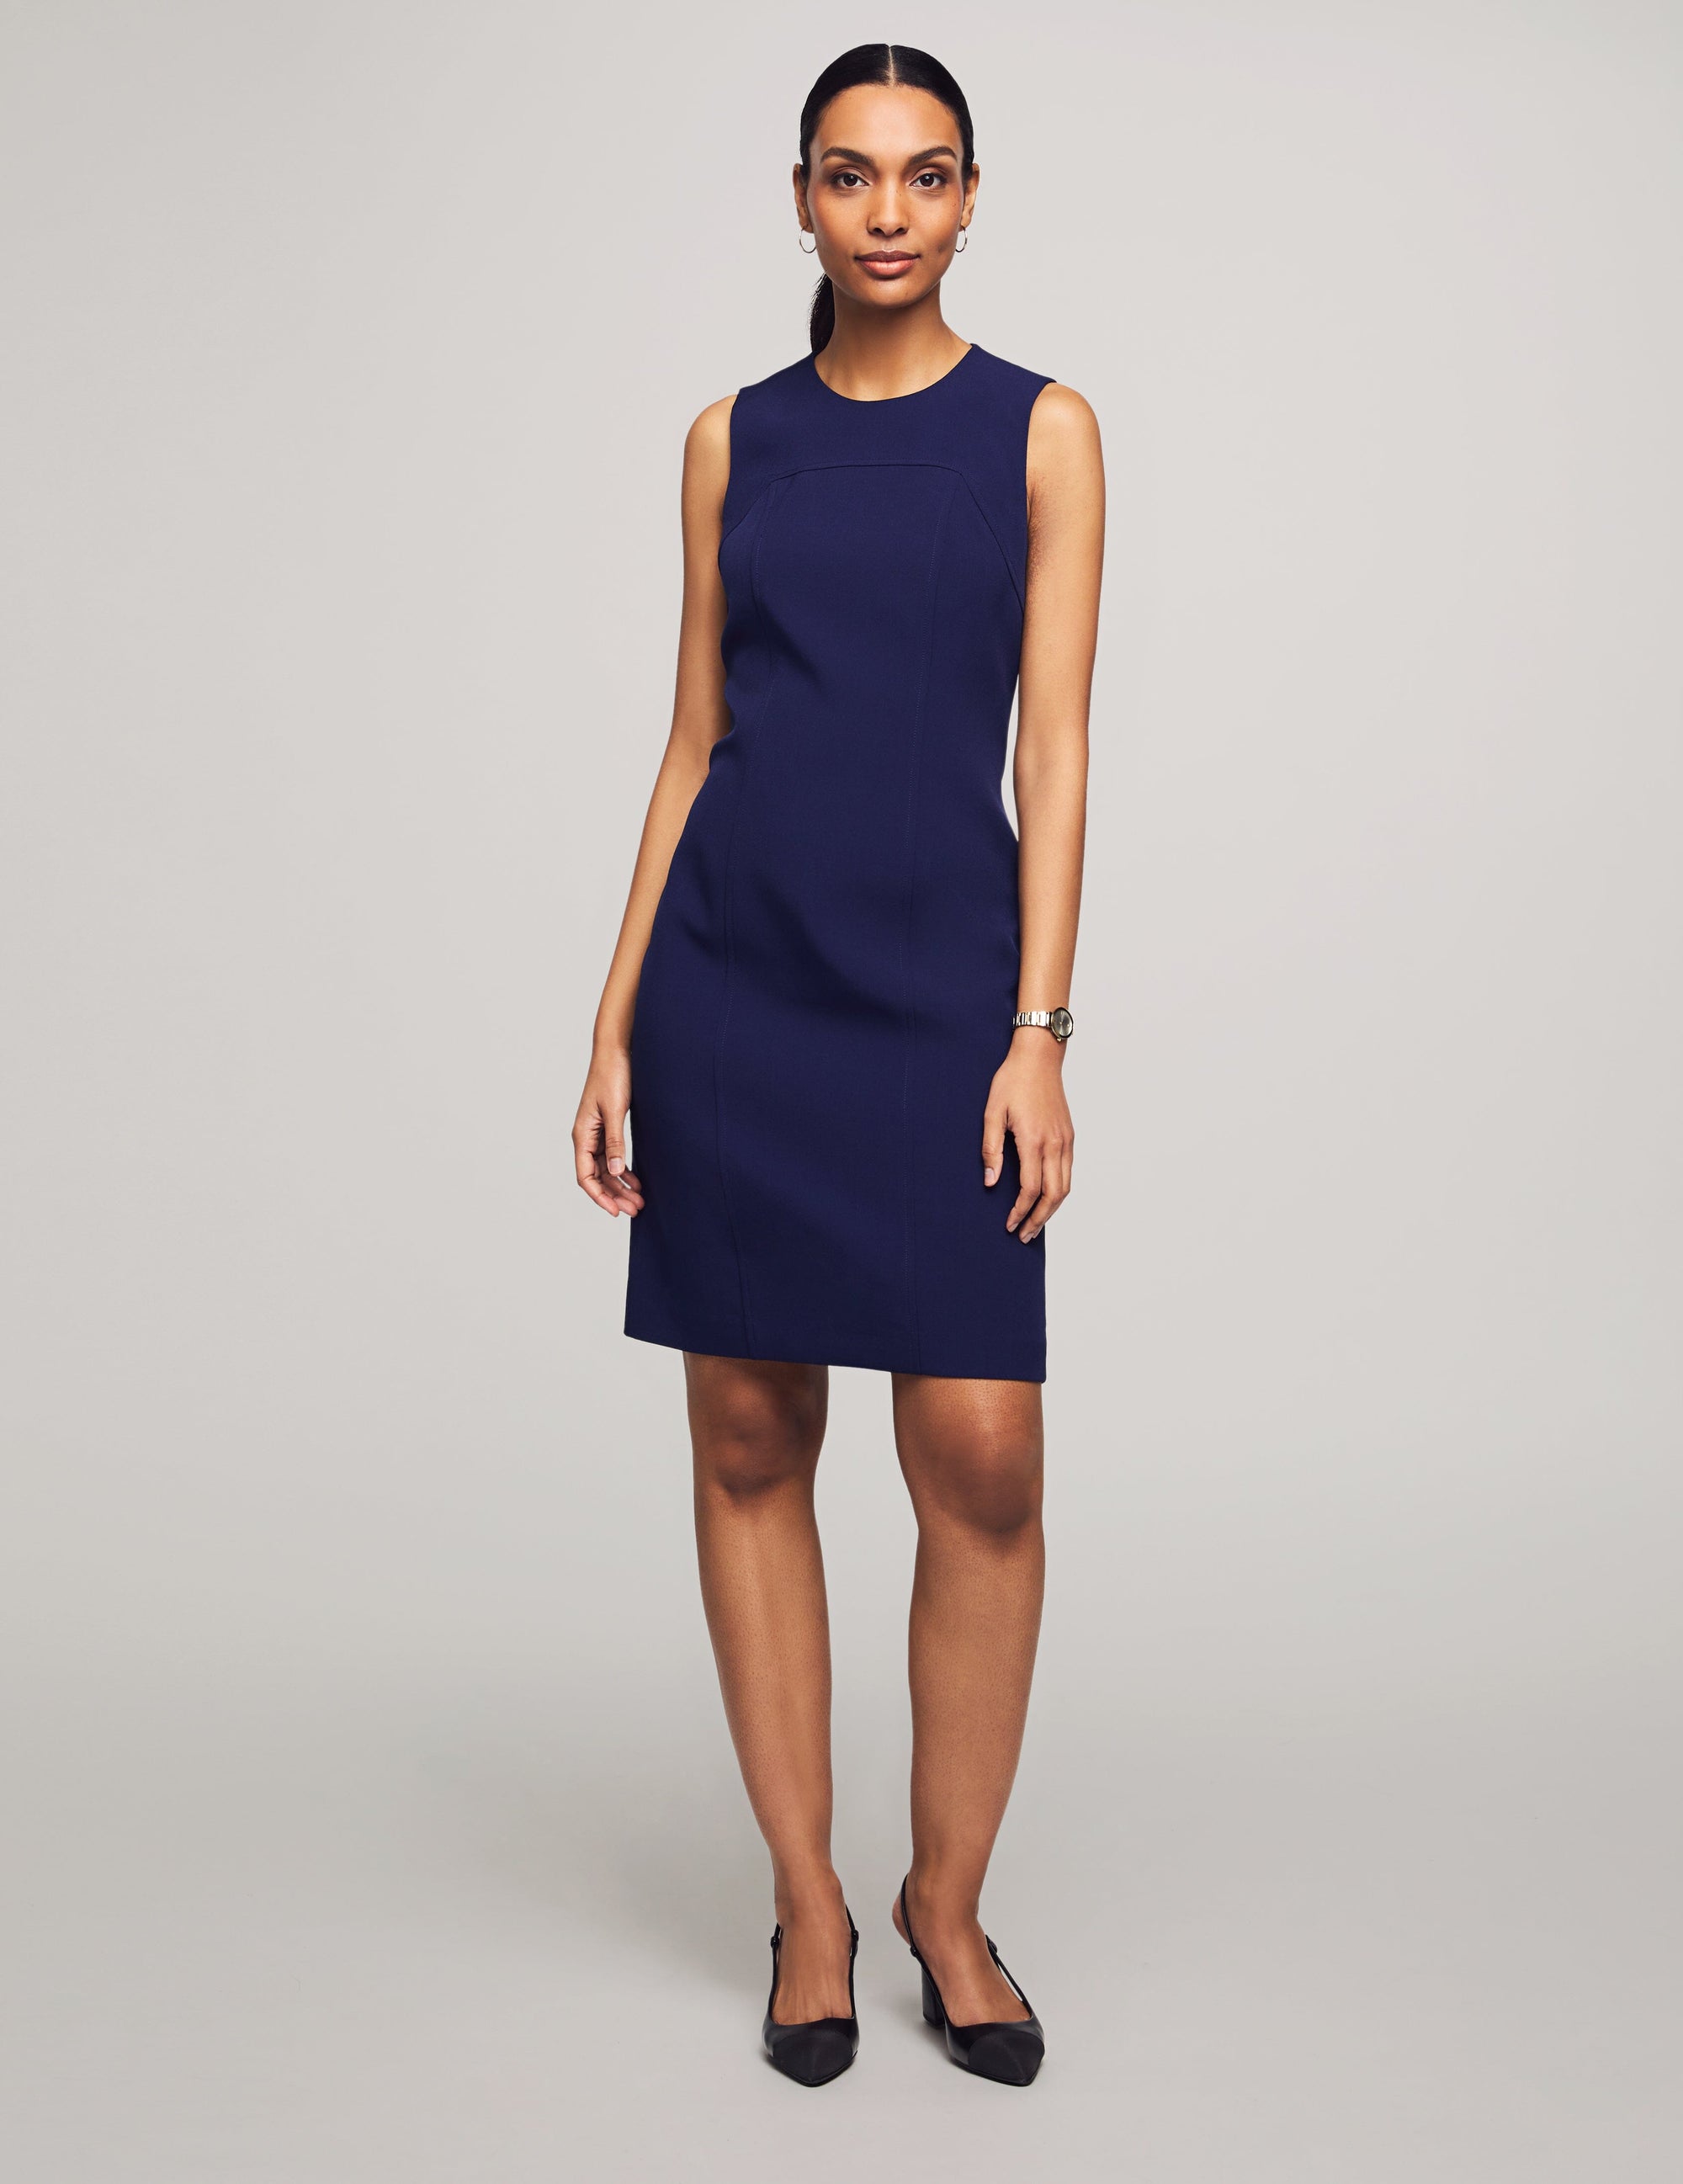 Fashion Ladies Corporate Navy-Blue Gown | Jumia Nigeria